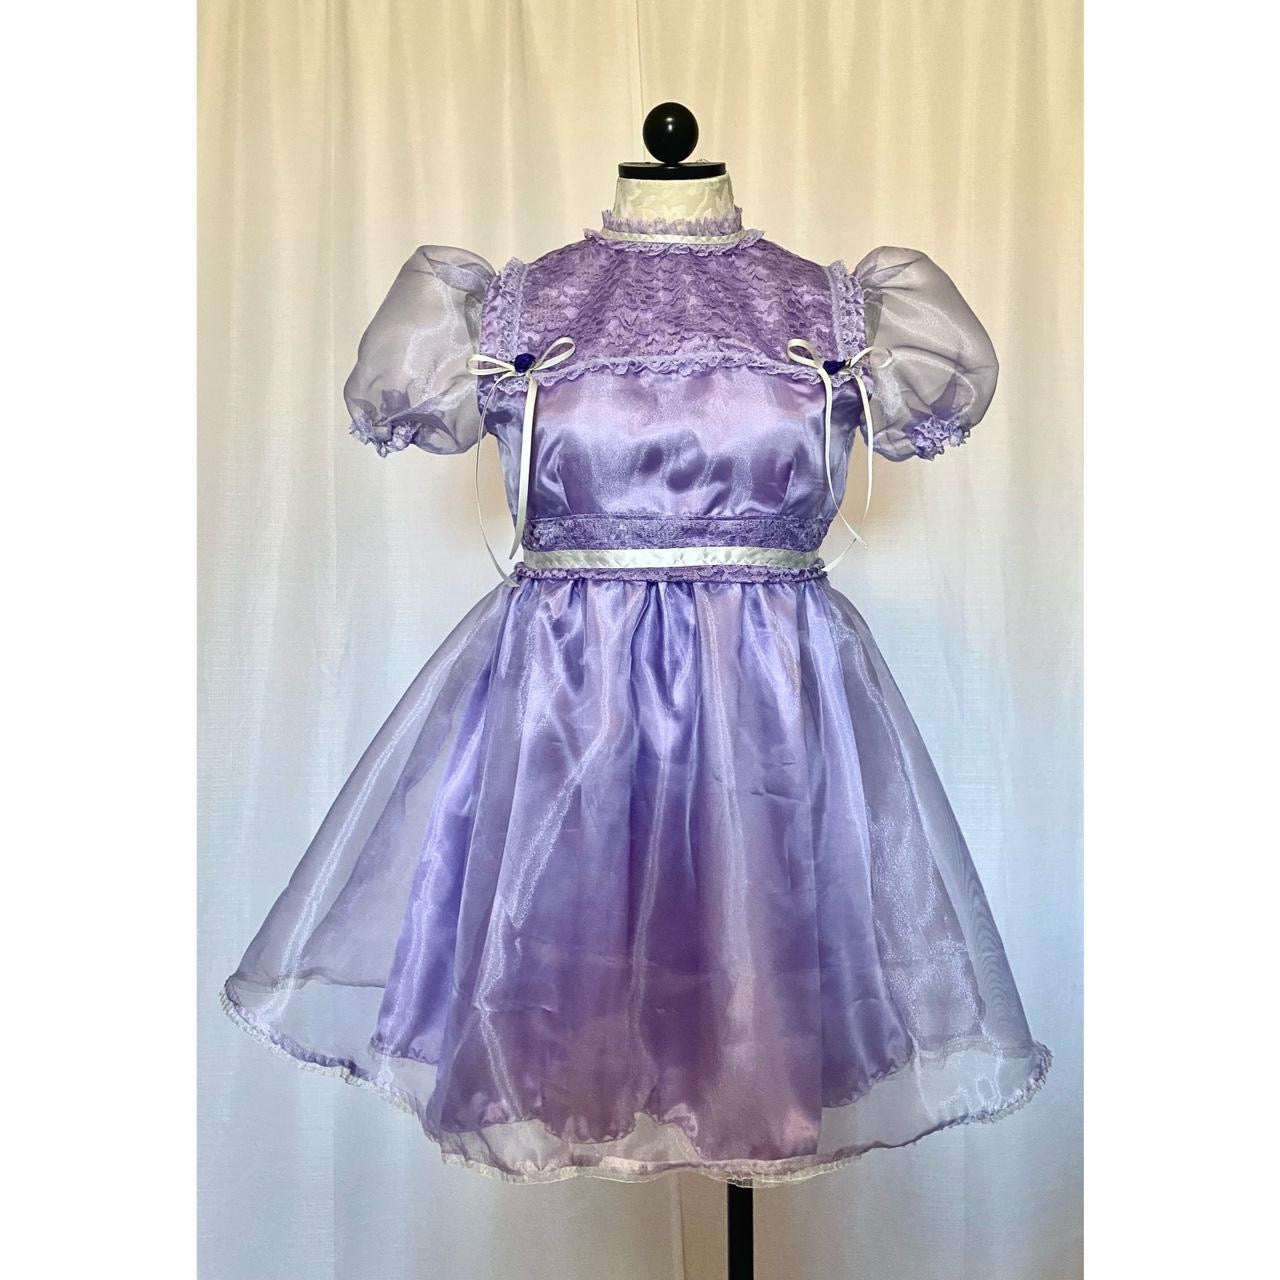 The Jocelyn Dress in Violet